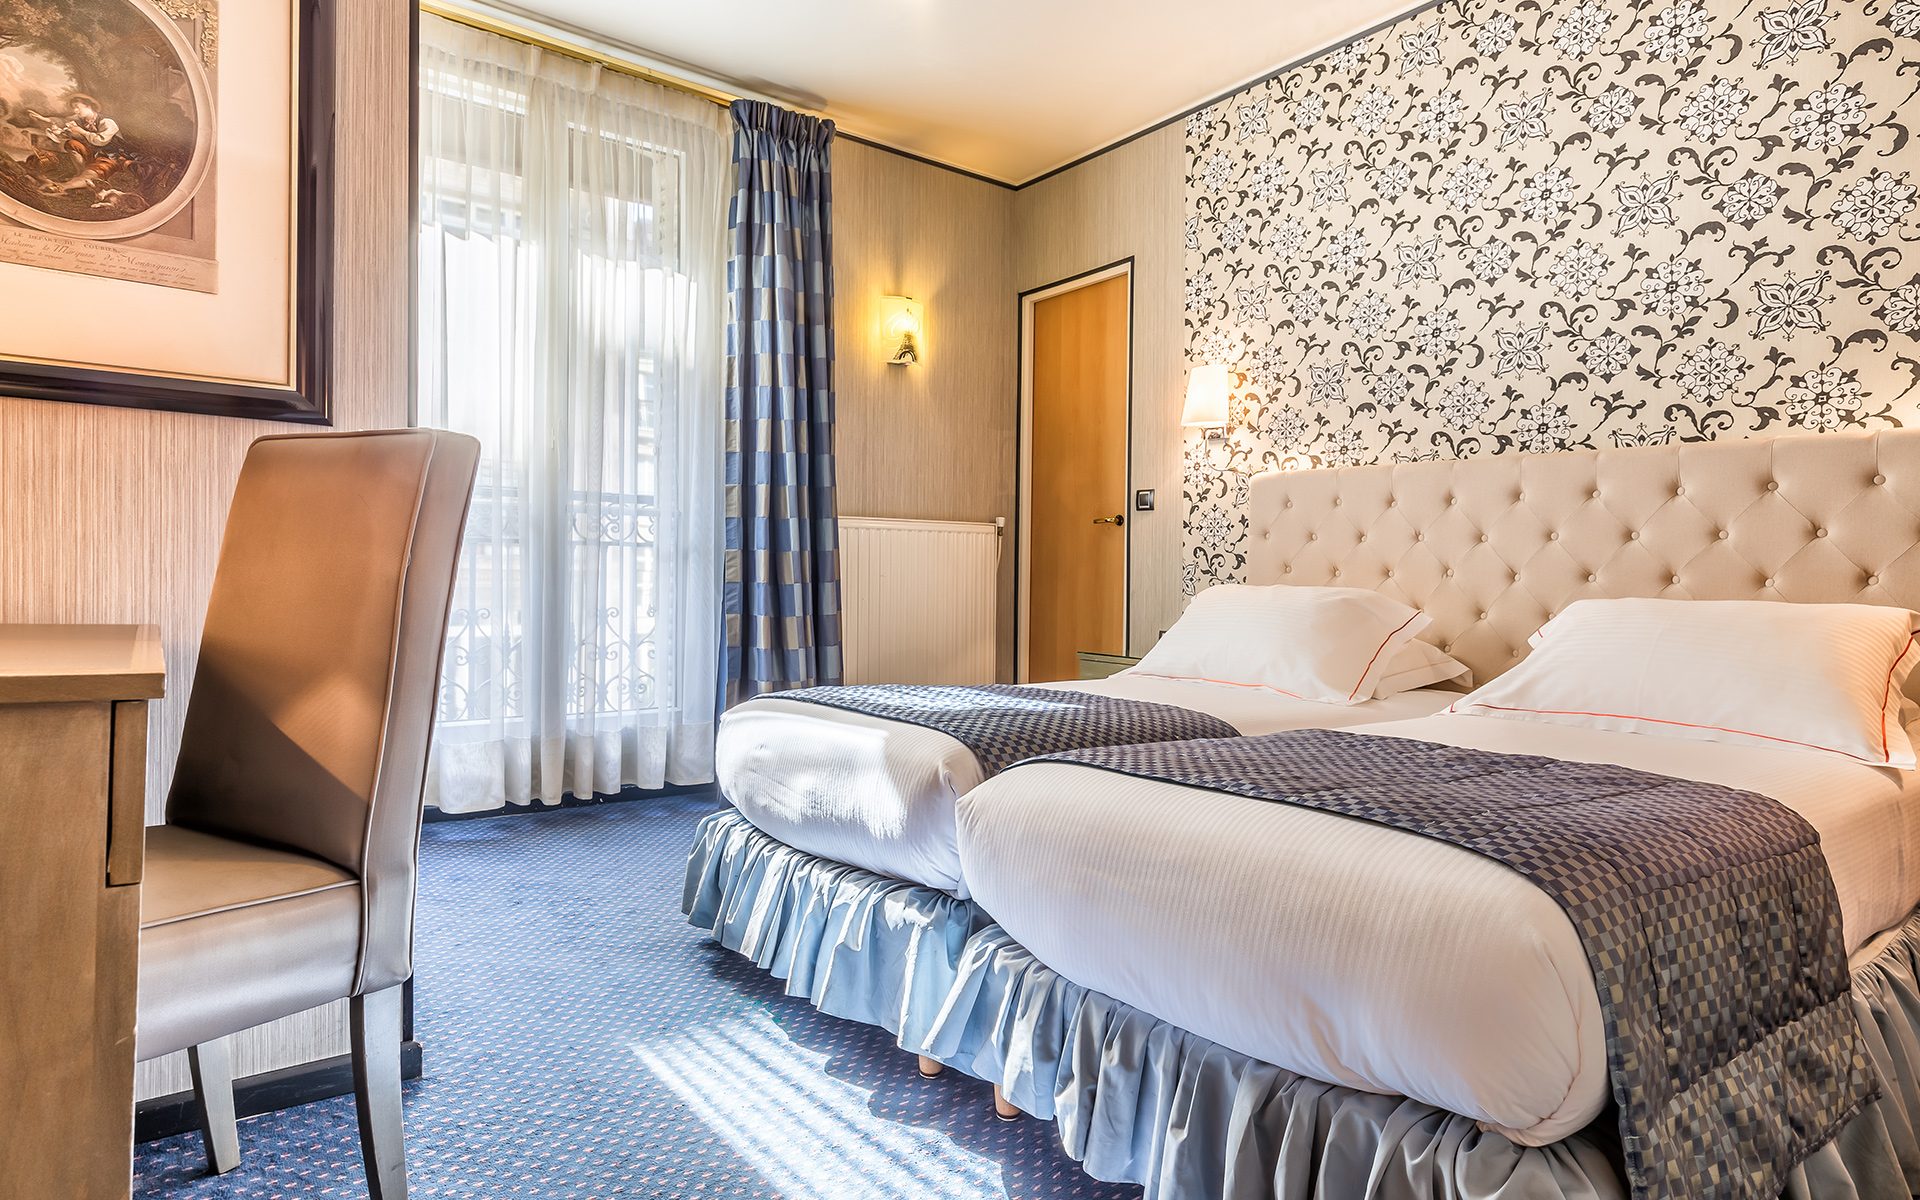 Hotel-Regence_Chambre302-5504-HDR-min